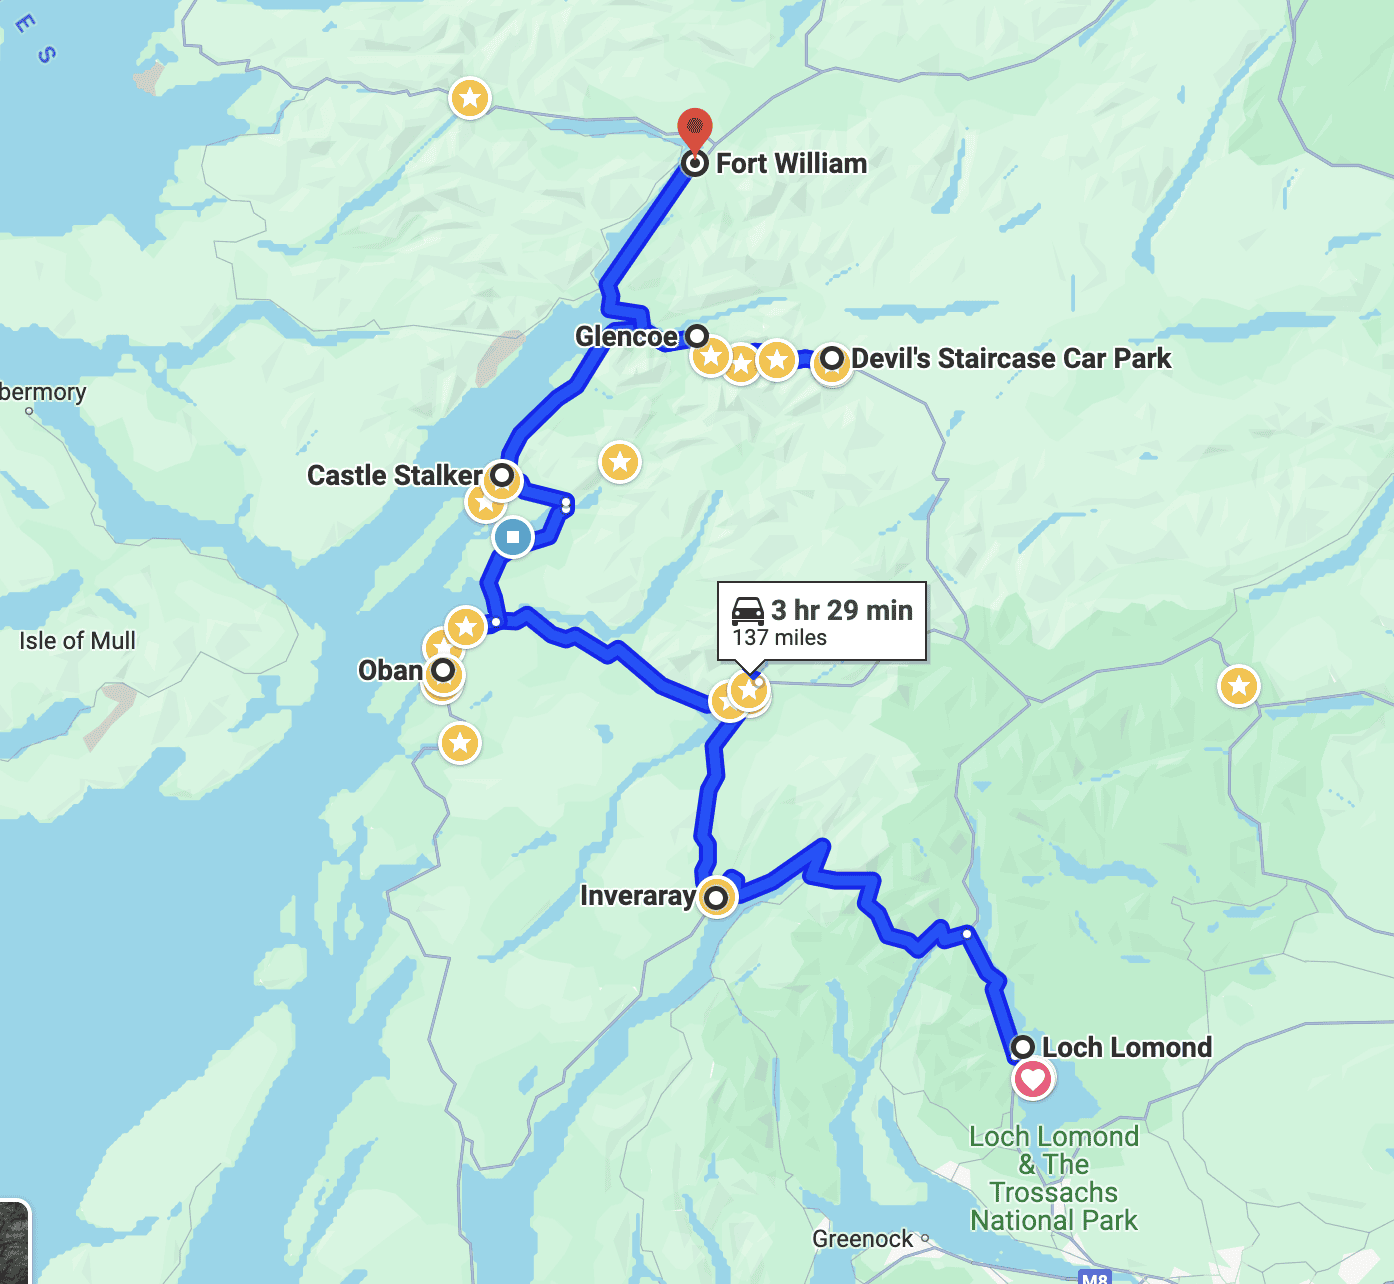 Loch Lomond to fort william road trip route